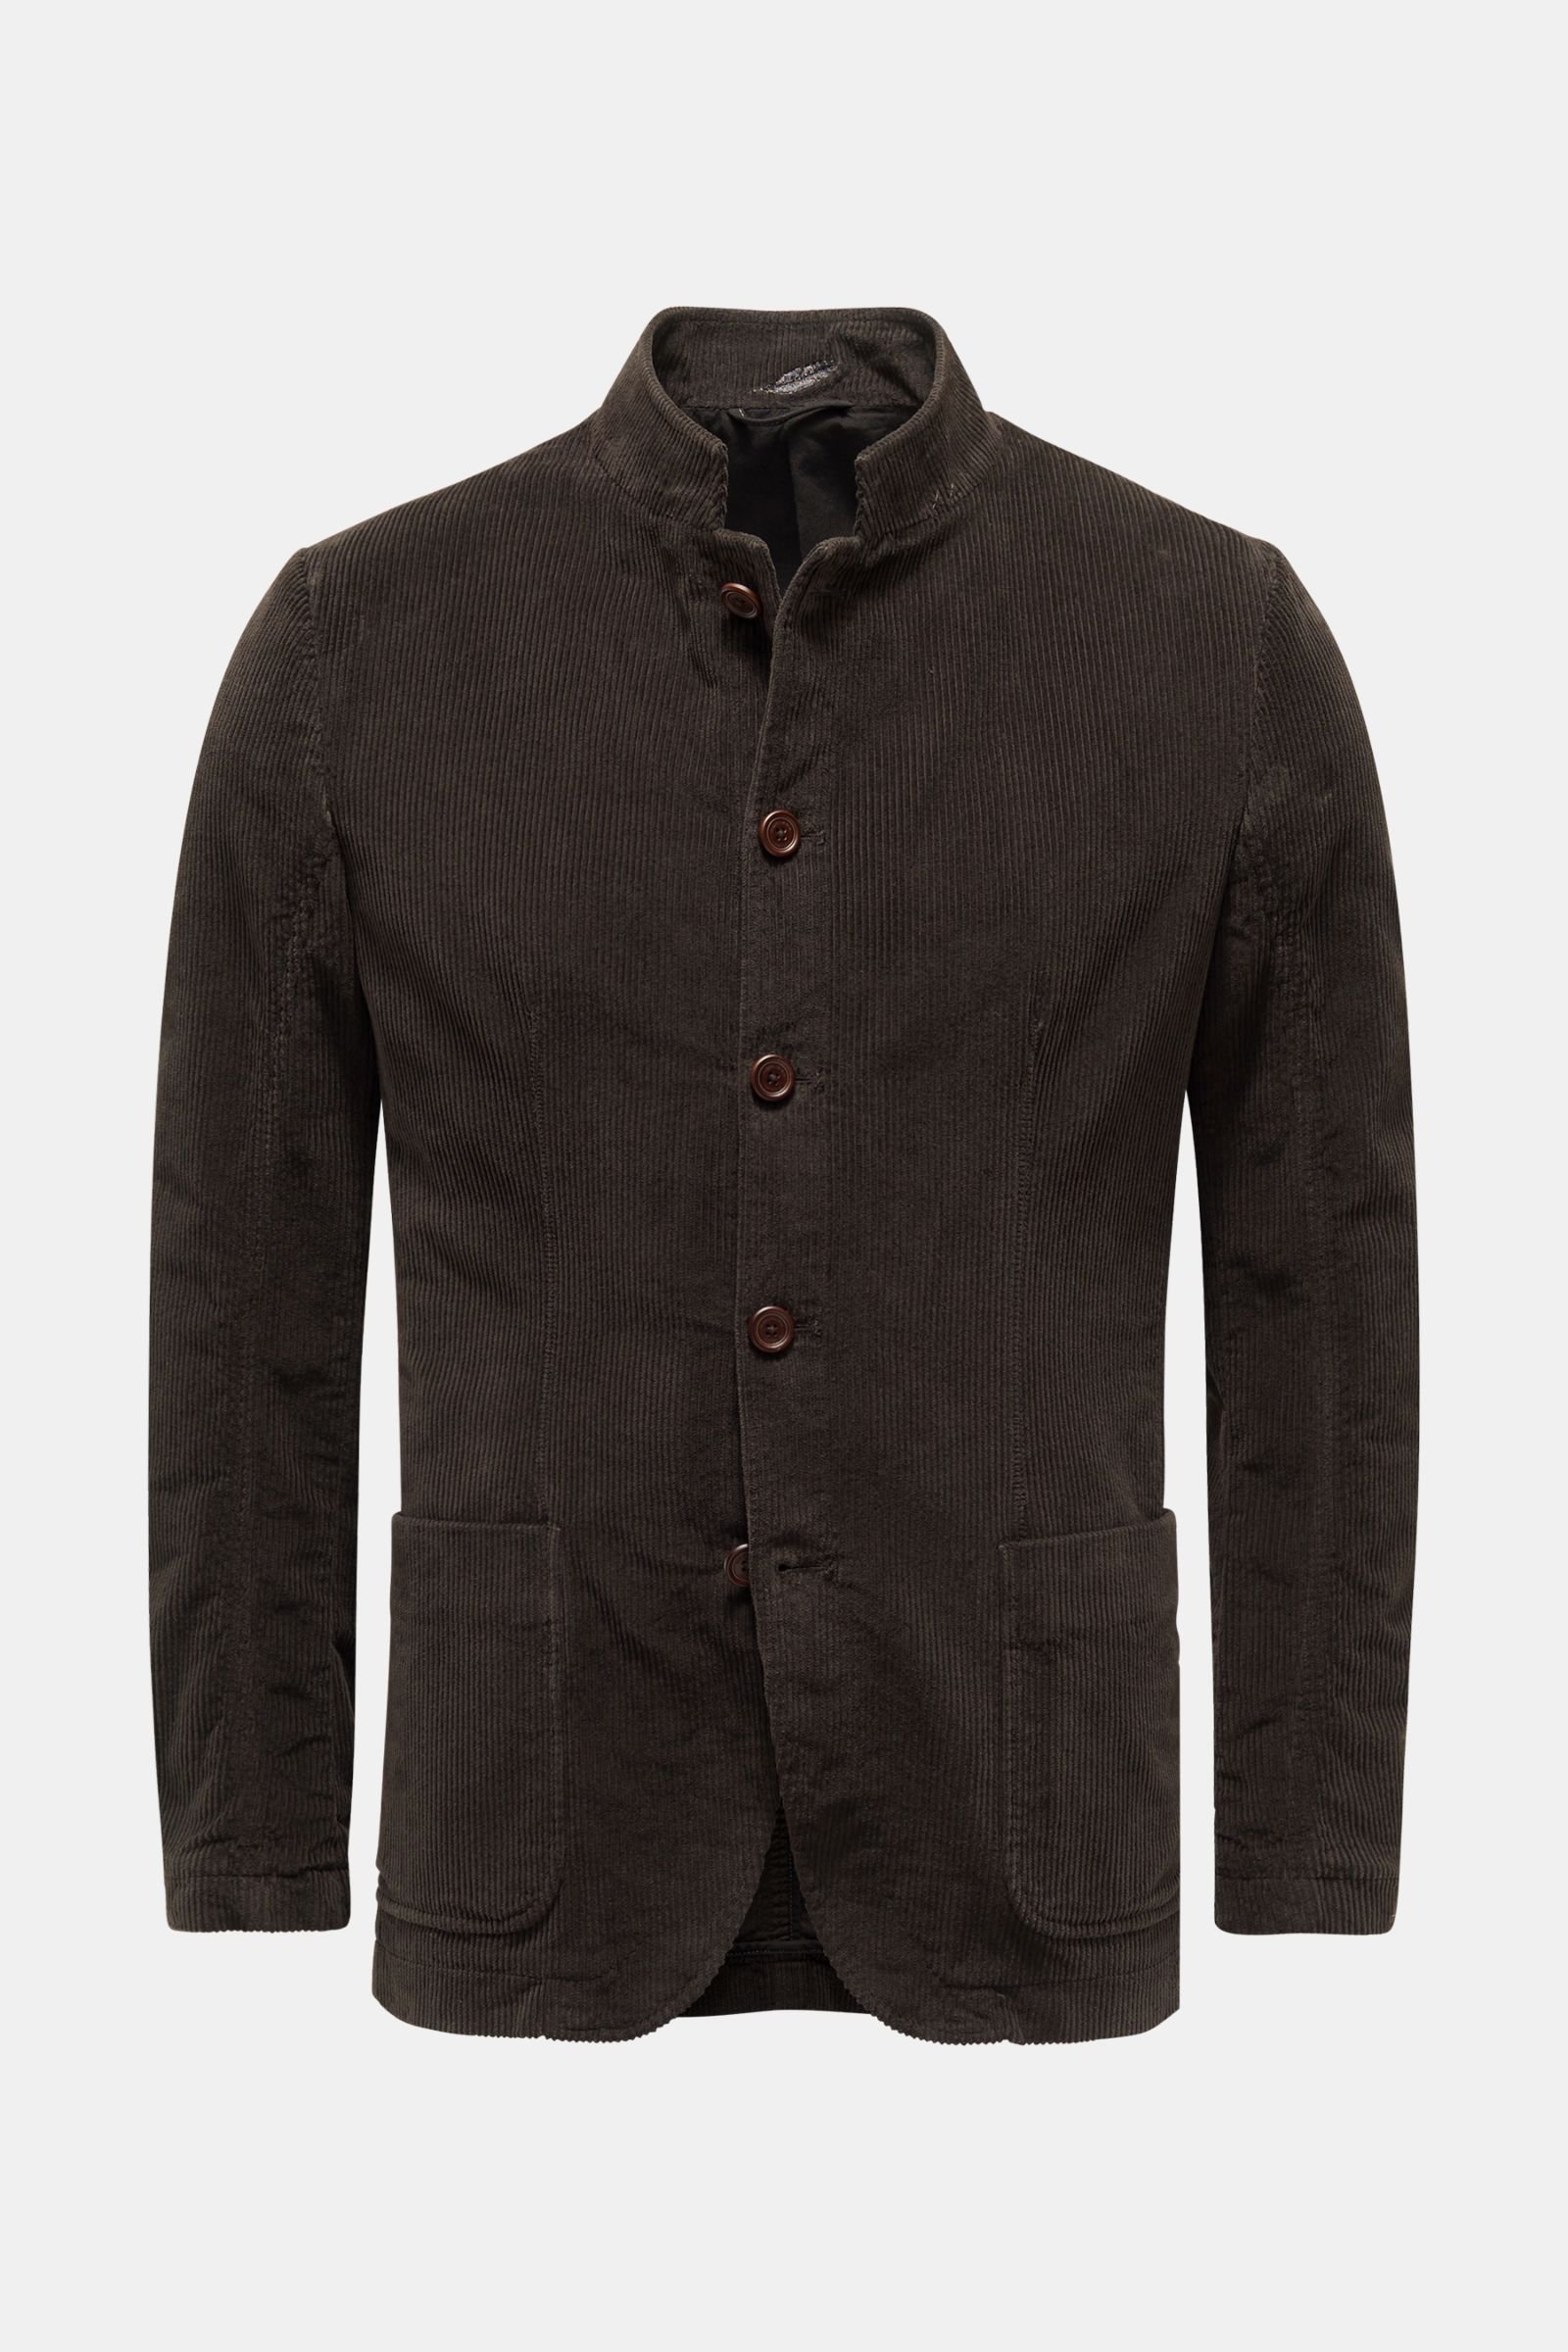 Corduroy jacket dark brown